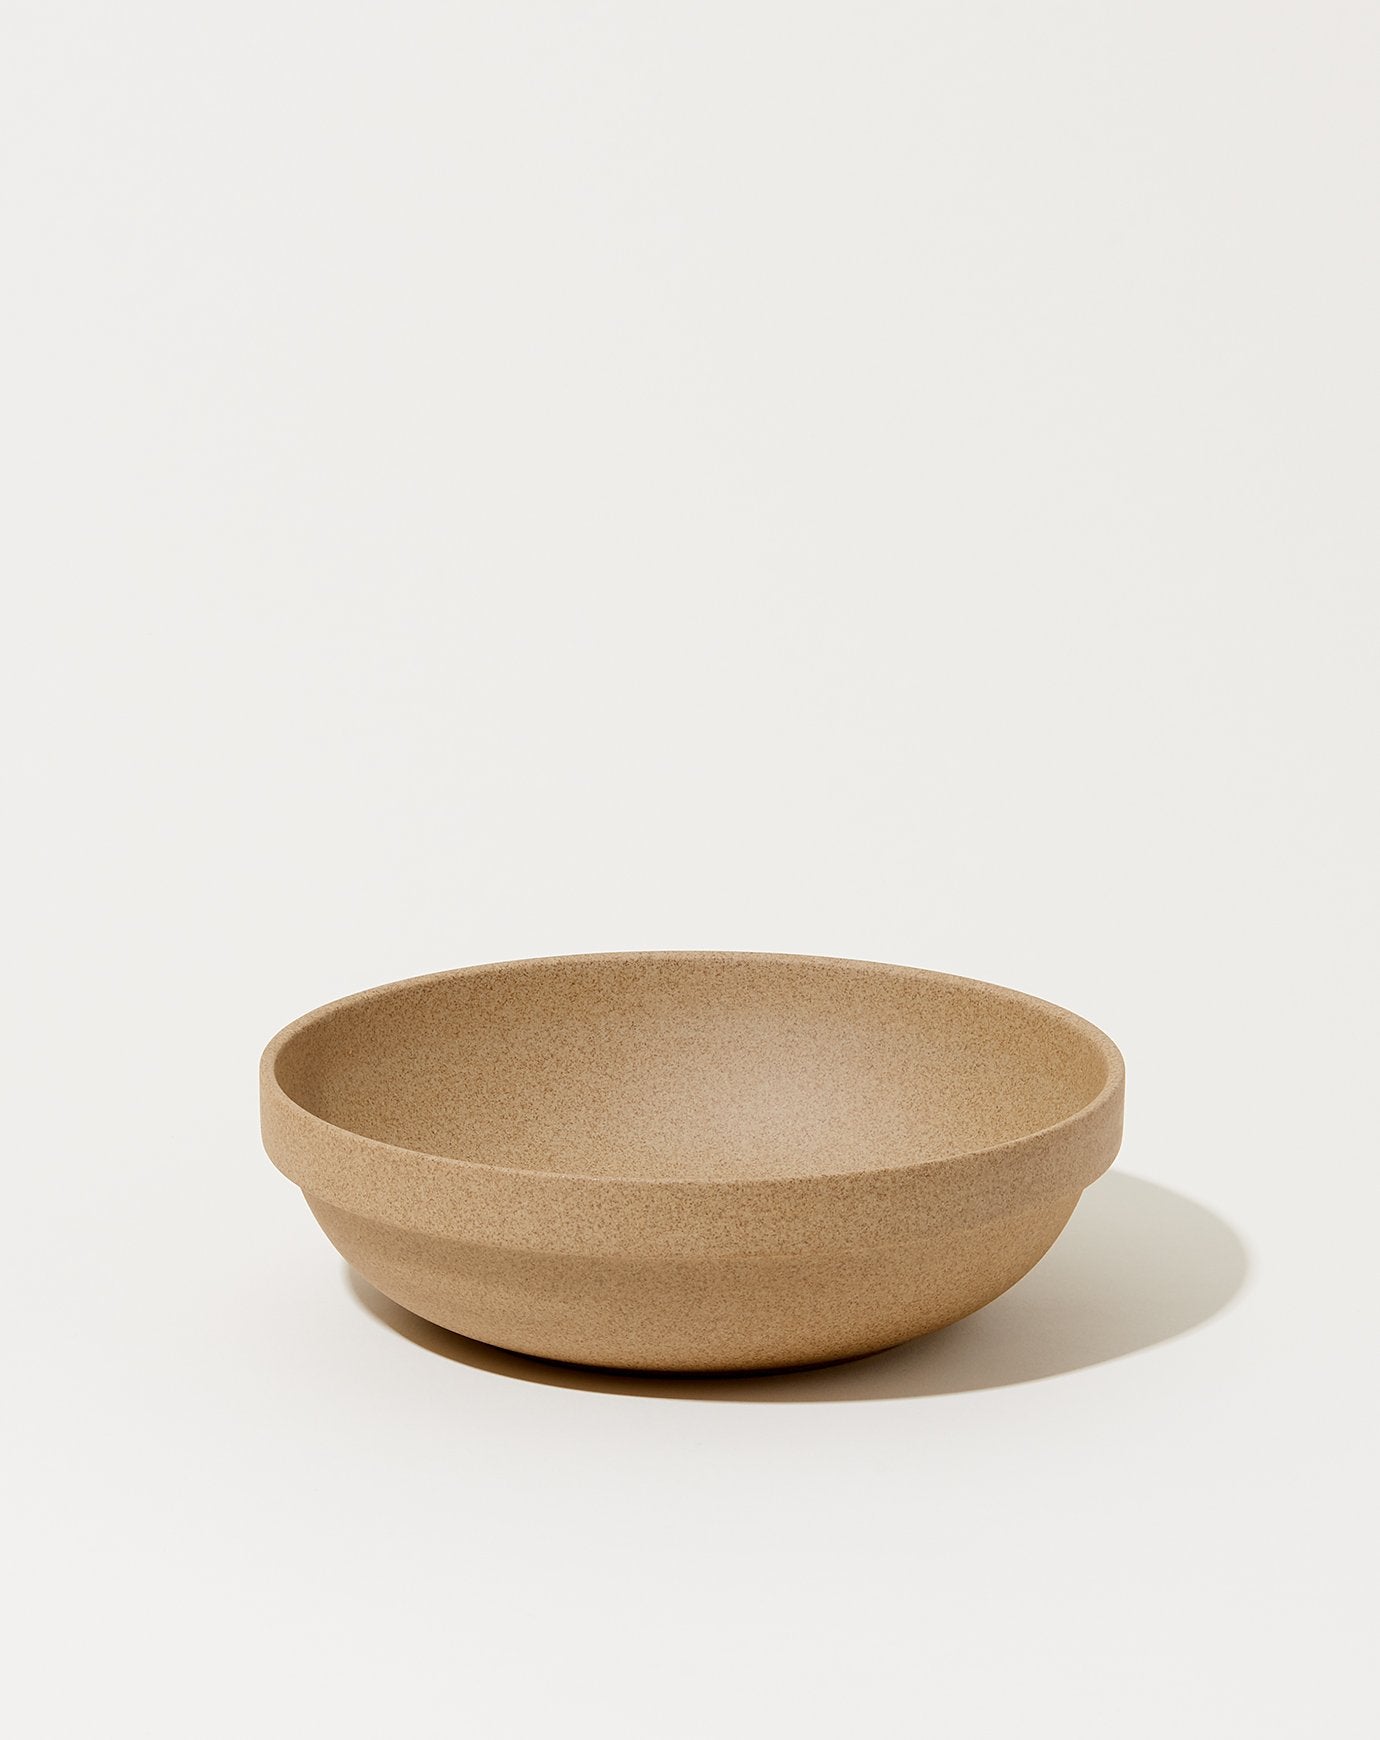 Hasami Porcelain Round Bowl in Natural